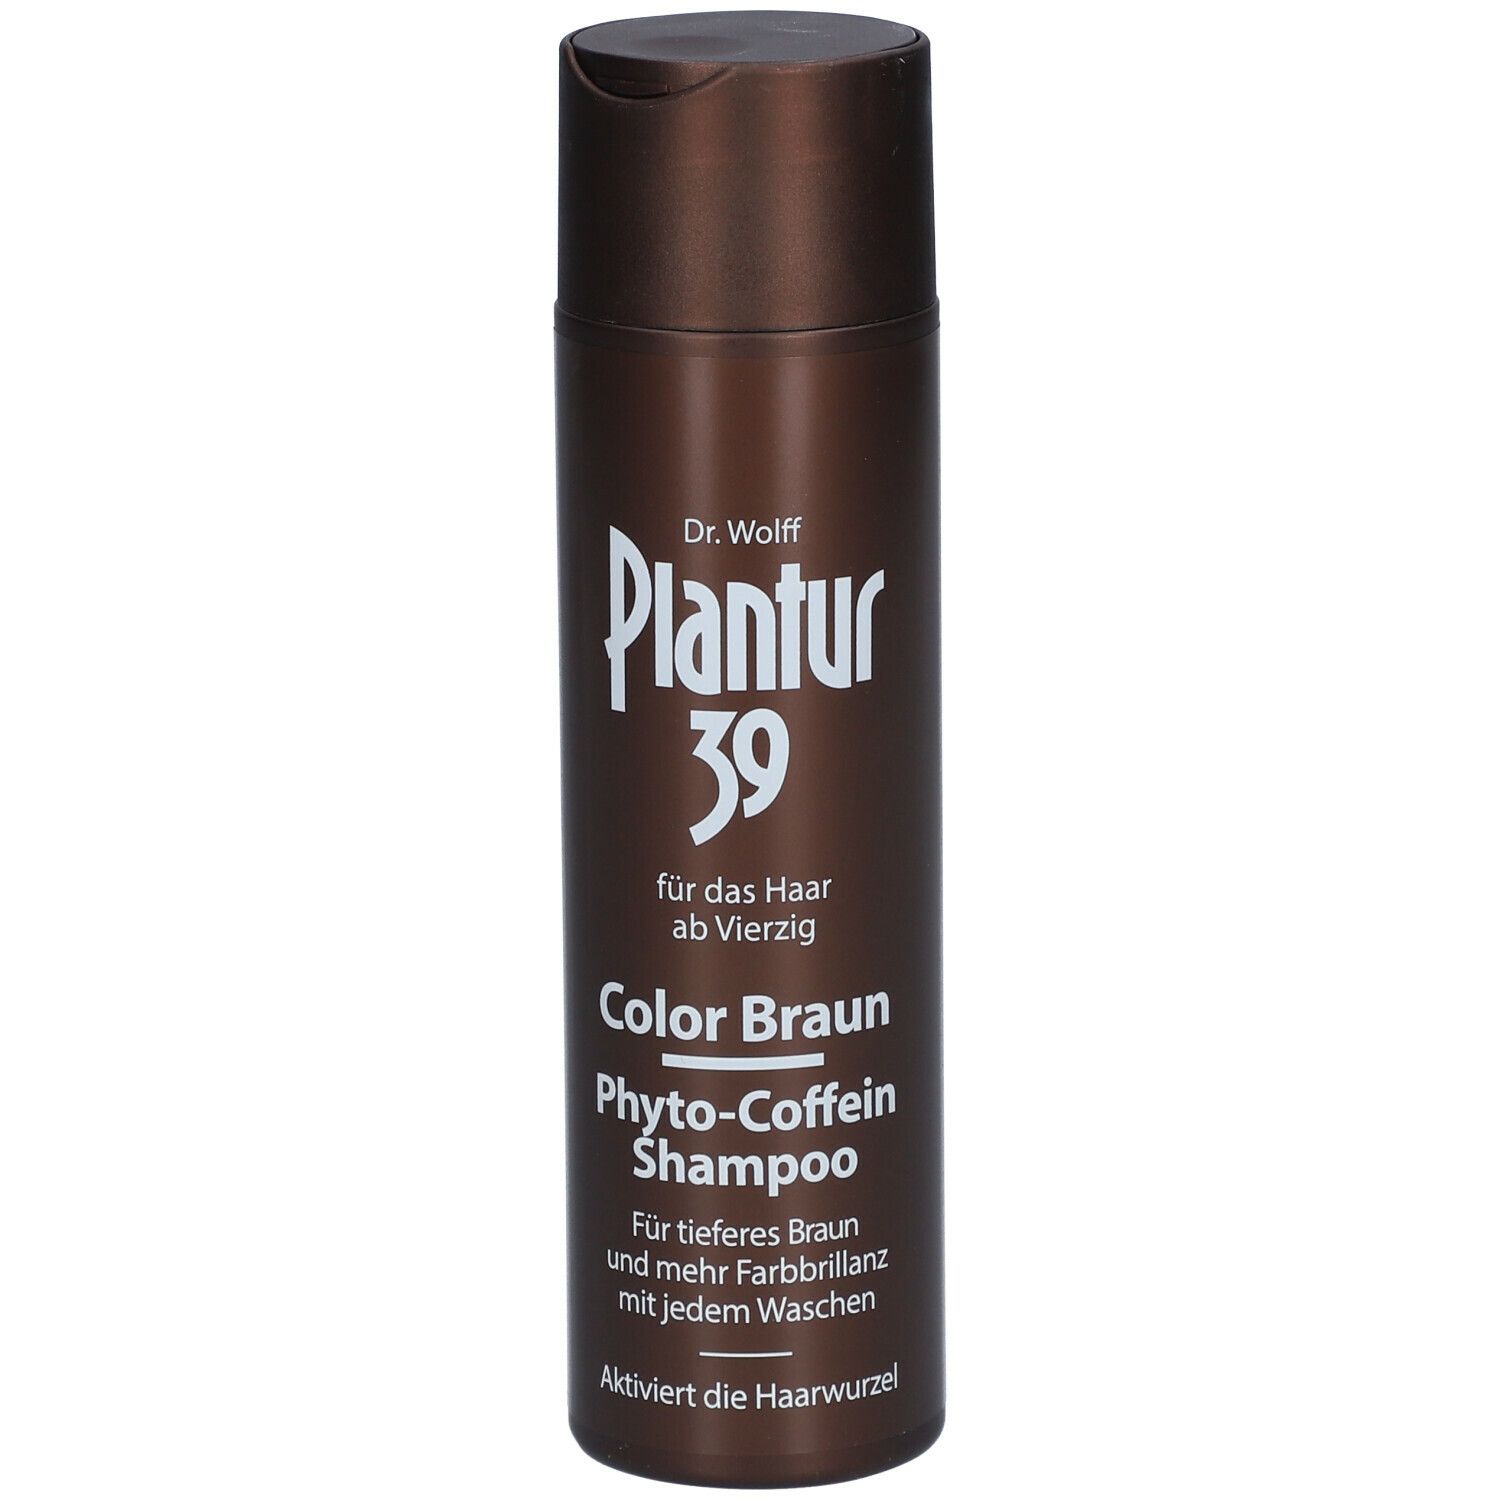 Image of PLANTUR 39 Color Braun Phyto-Coffein-Shampoo